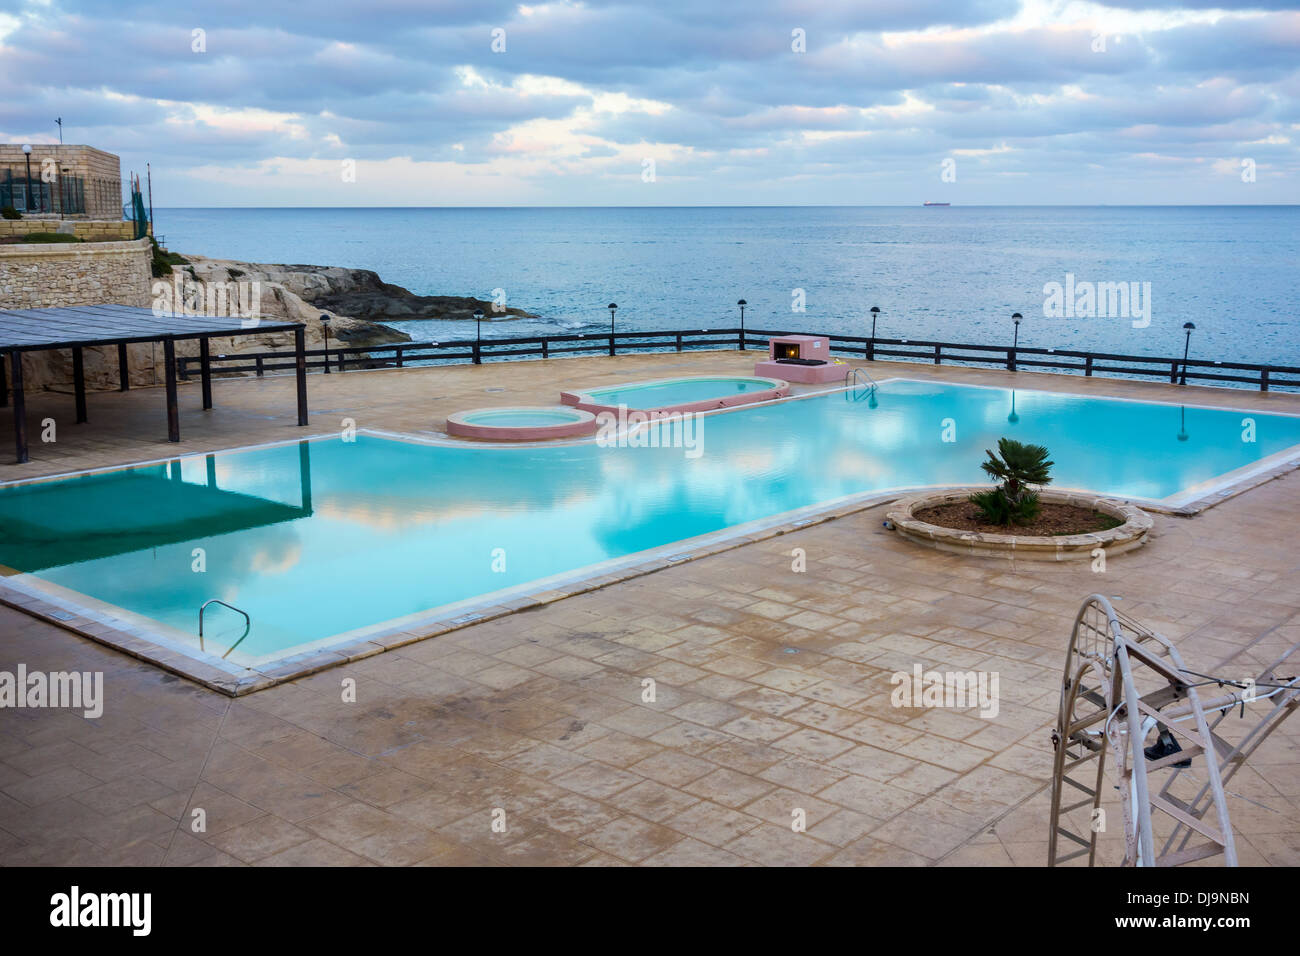 The Westin Hotel and Resort Dragonara Island of Malta Mediterranean Sea Europe Reef Club Swimming Pool looking out to sea Stock Photo